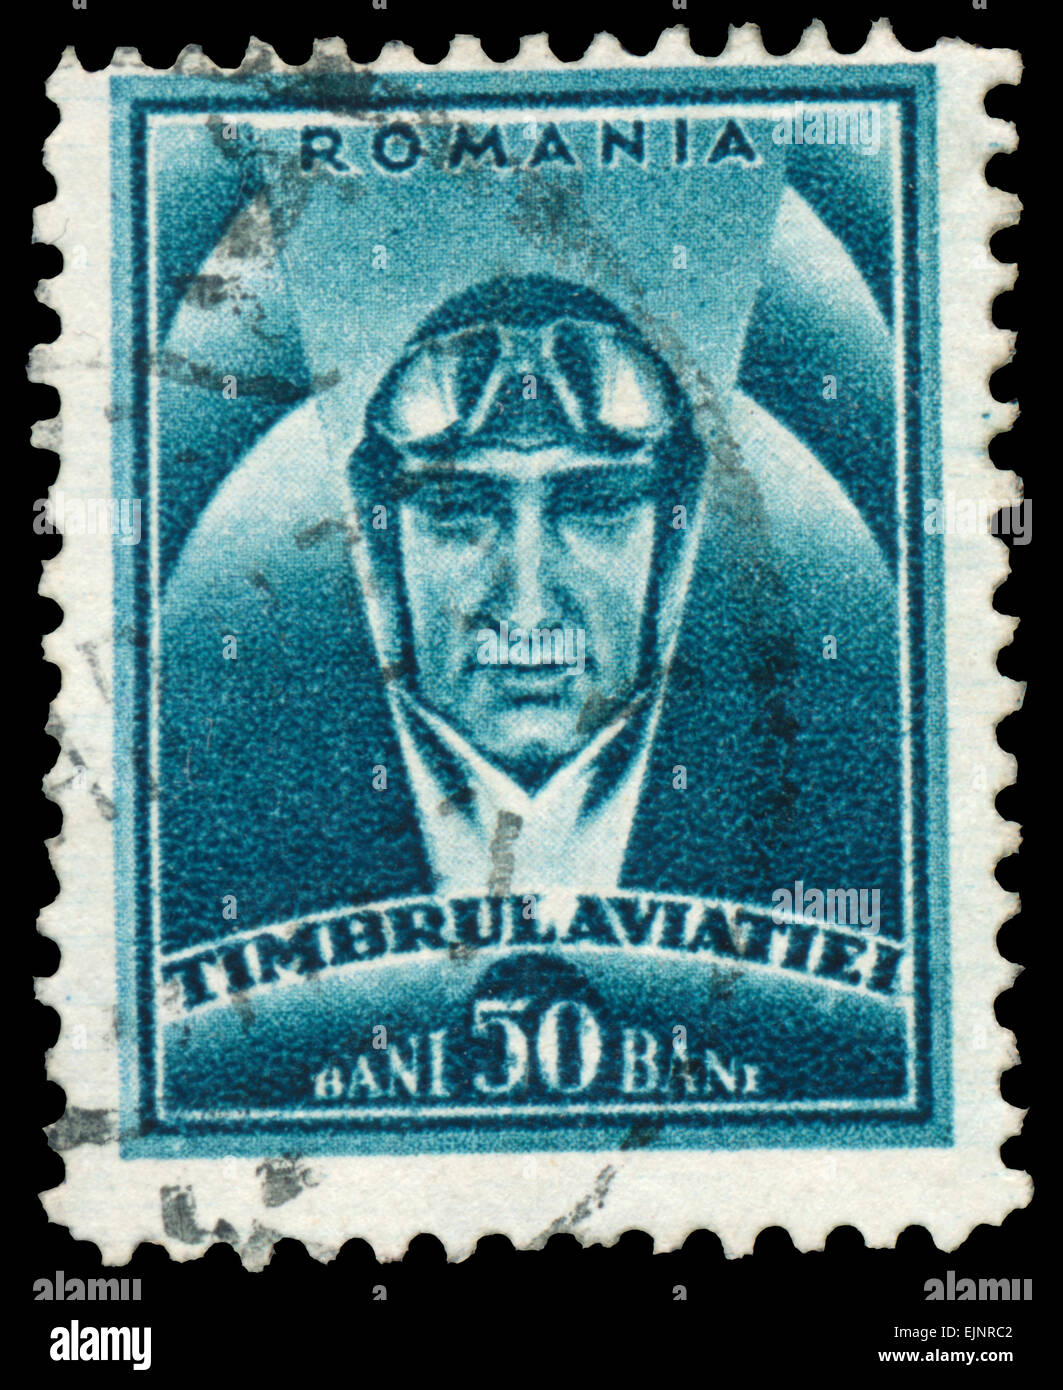 ROMANIA - CIRCA 1932: Stamp printed in Romania shows pilot, with inscription 'Timbrul Aviatiei' Stock Photo